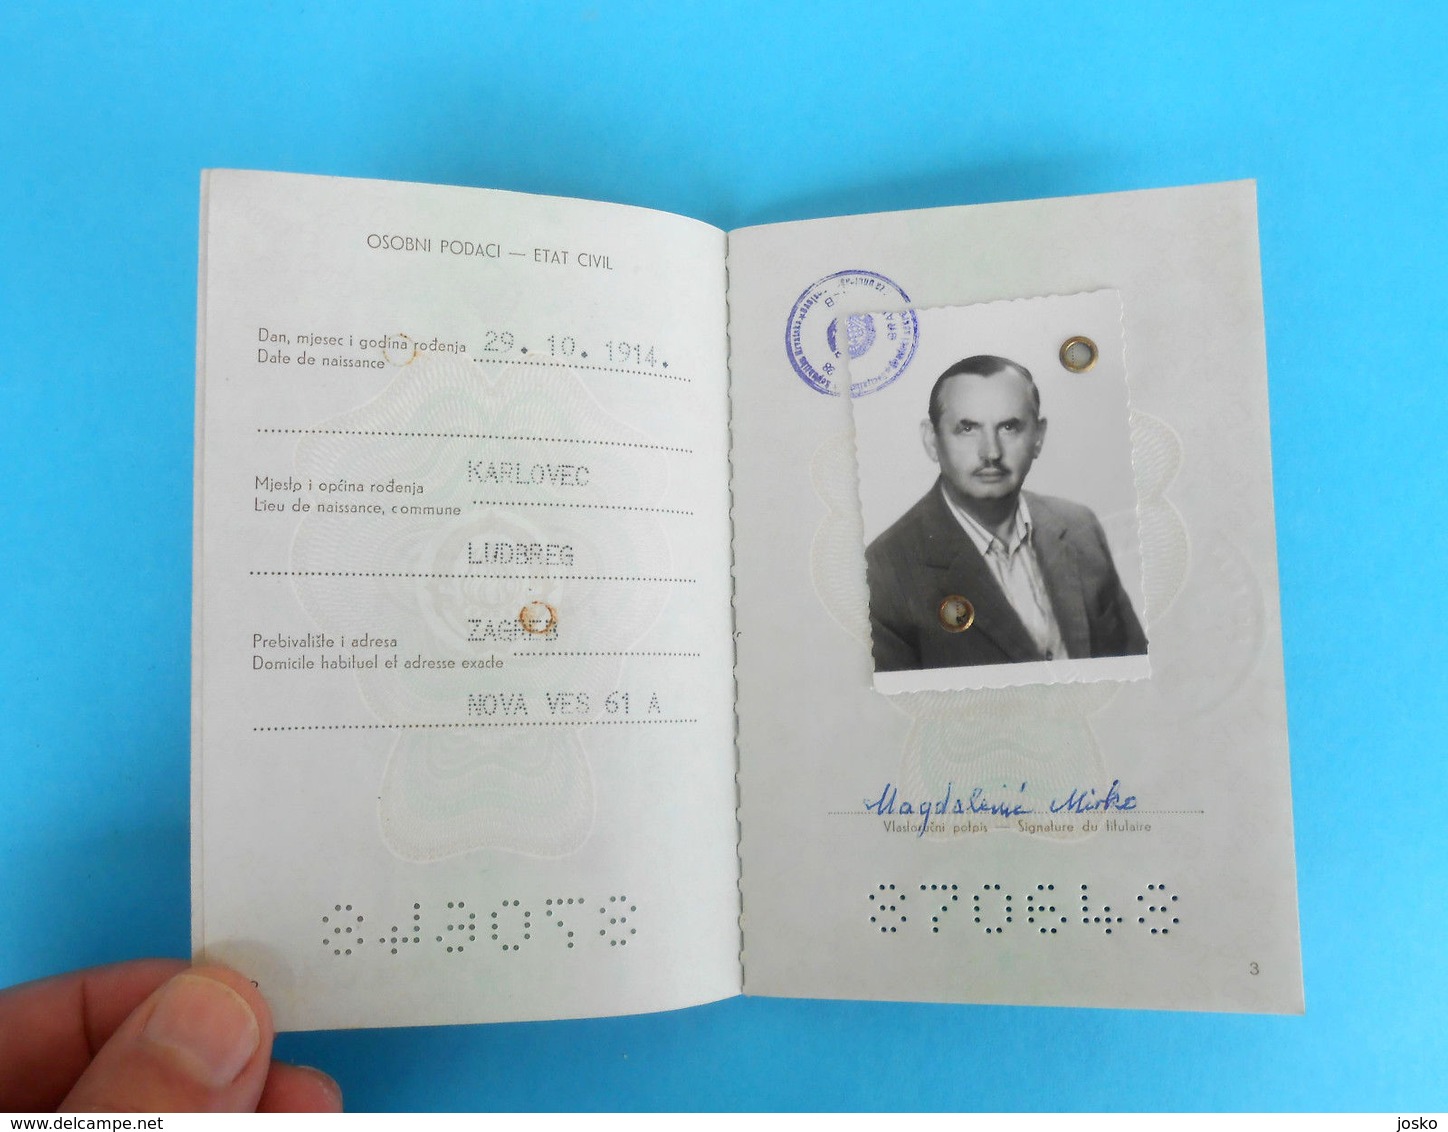 YUGOSLAVIA PASSPORTS - 2. DIFFERENT MODELS ... Passport Passeport Reisepass Pass Pasaporte Passaporte Passaporto - Historical Documents